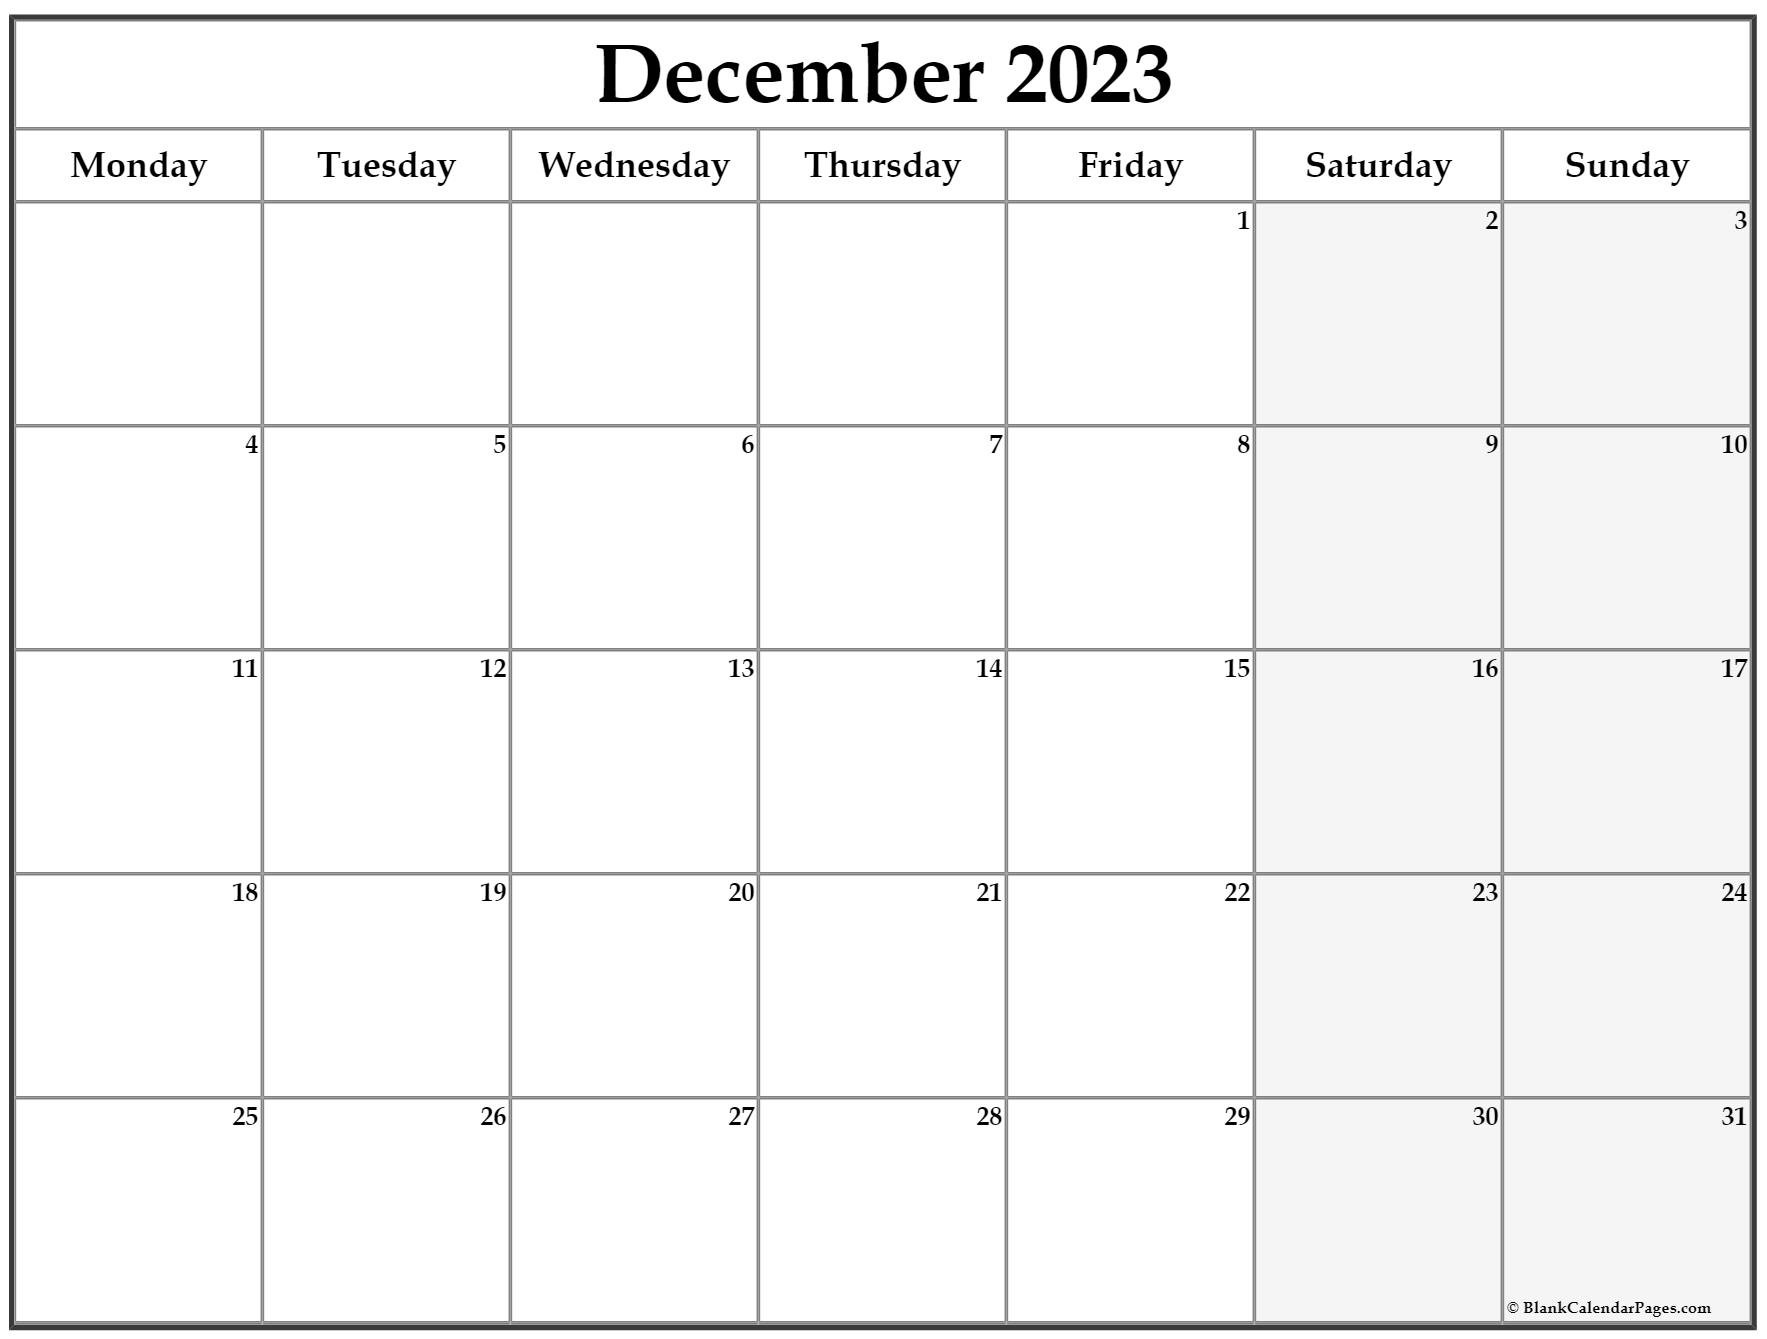 monthly-monday-2023-calendar-printable-calendar-quickly-january-2021